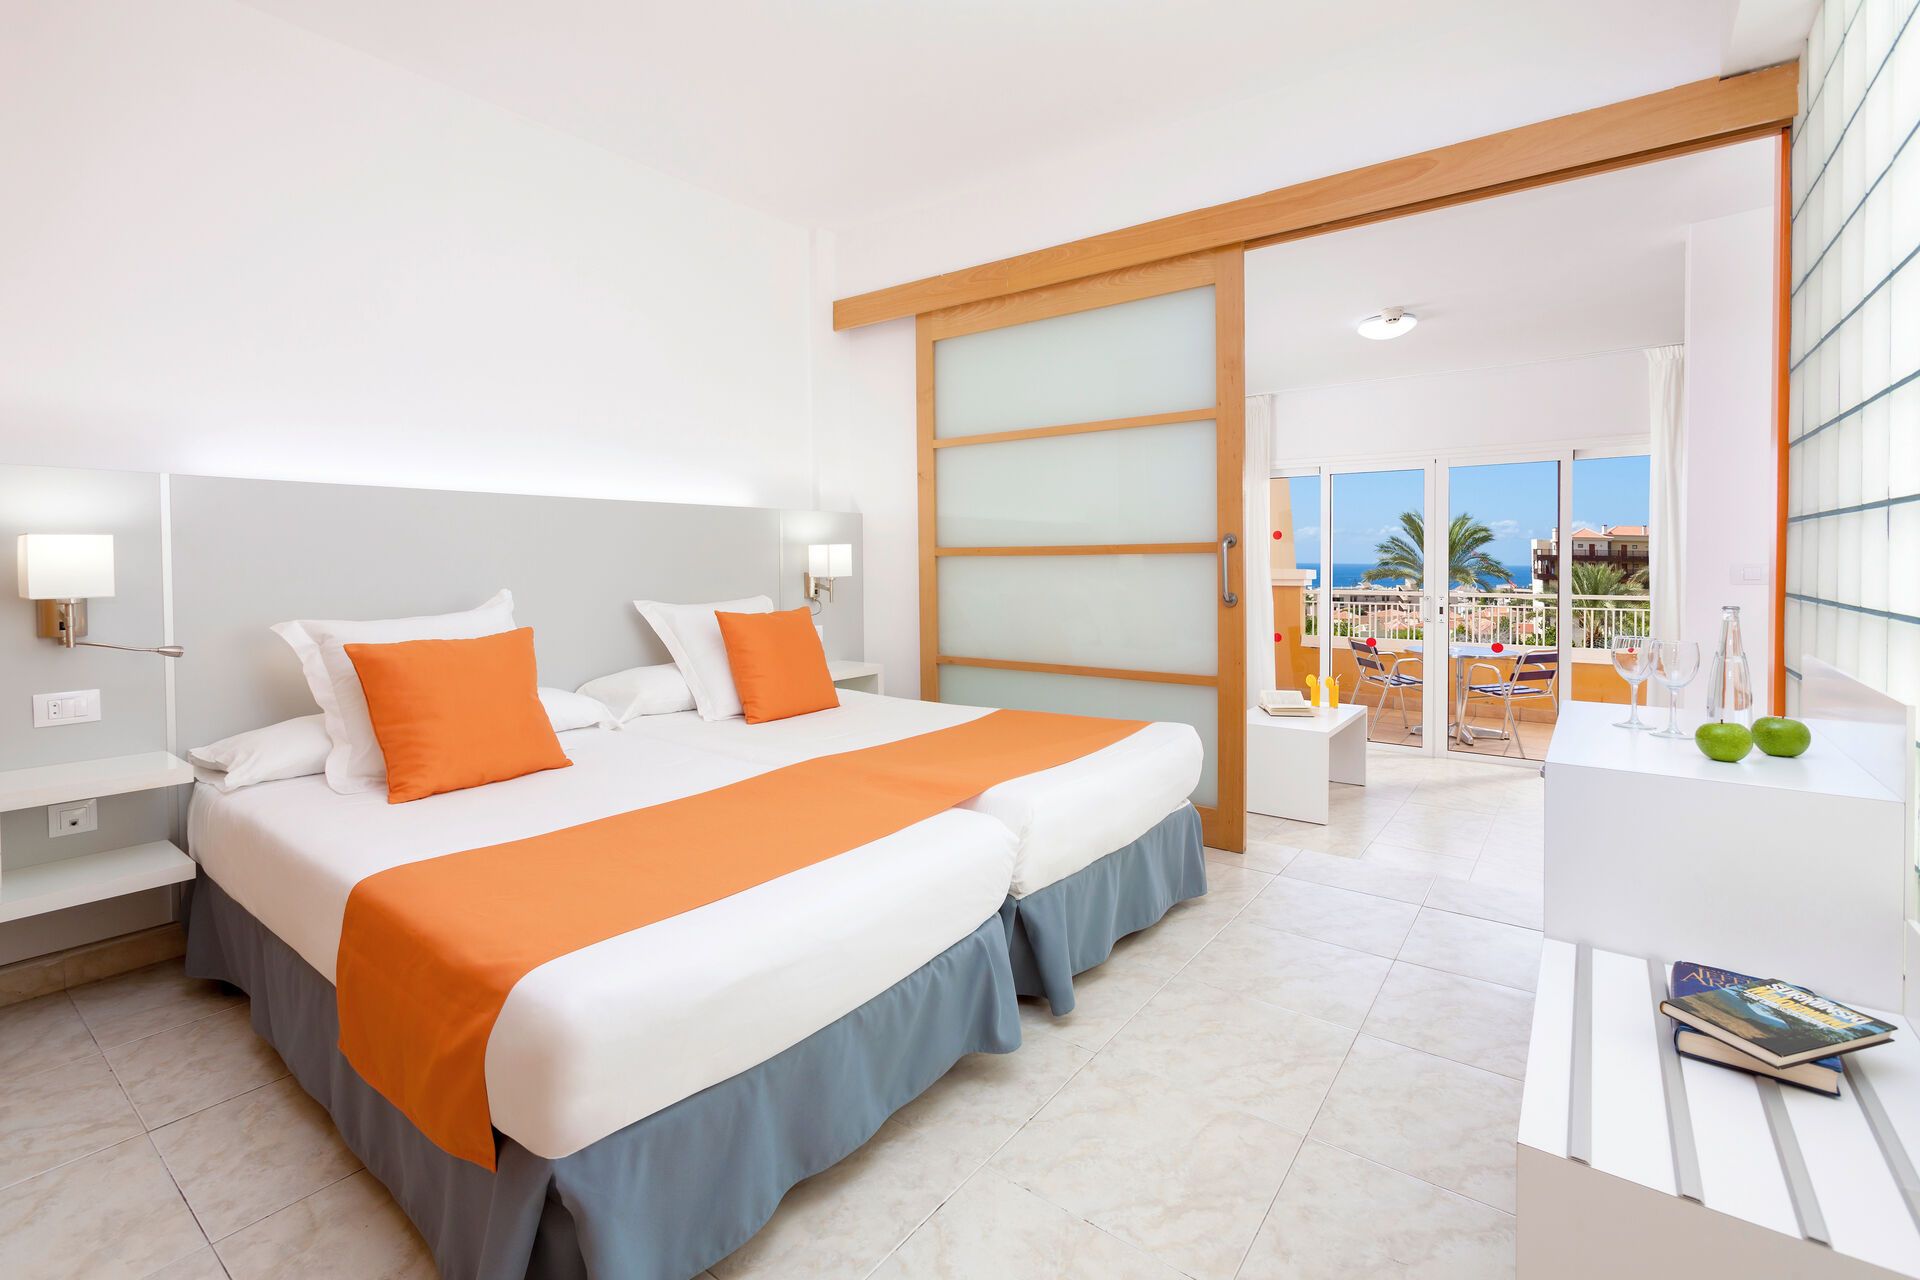 Canaries - Tenerife - Espagne - Hôtel Chatur Playa Real 4*